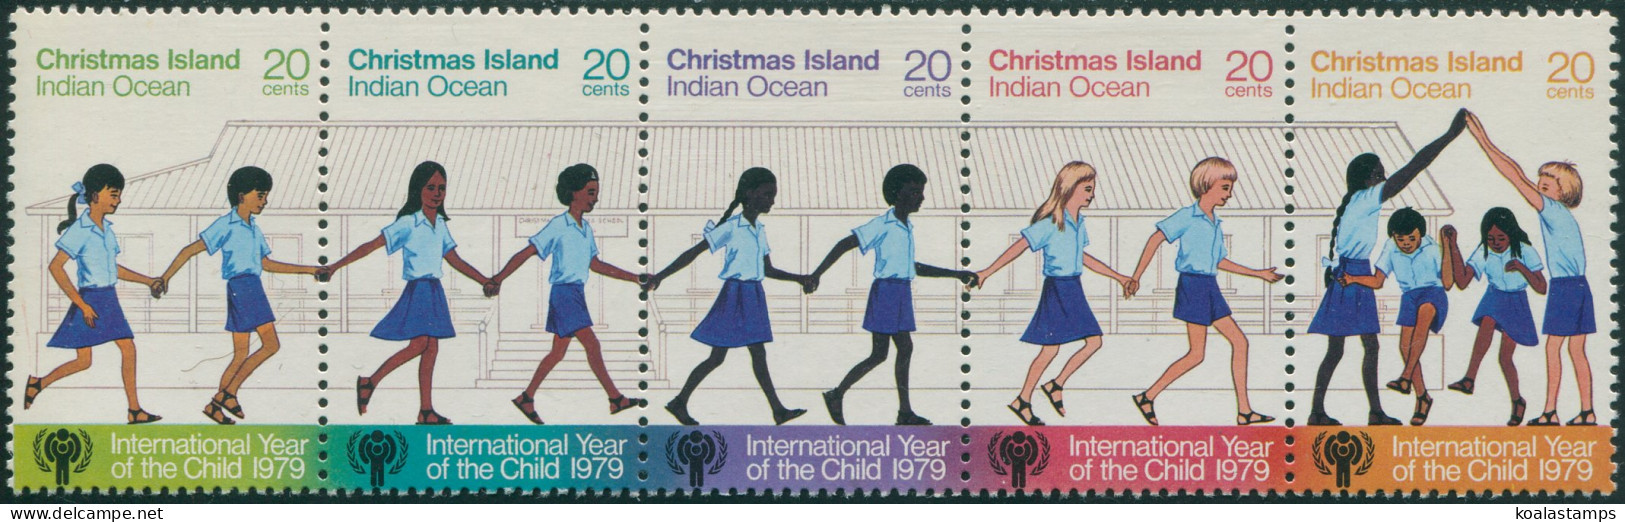 Christmas Island 1979 SG108a International Year Child Strip MNH - Christmaseiland